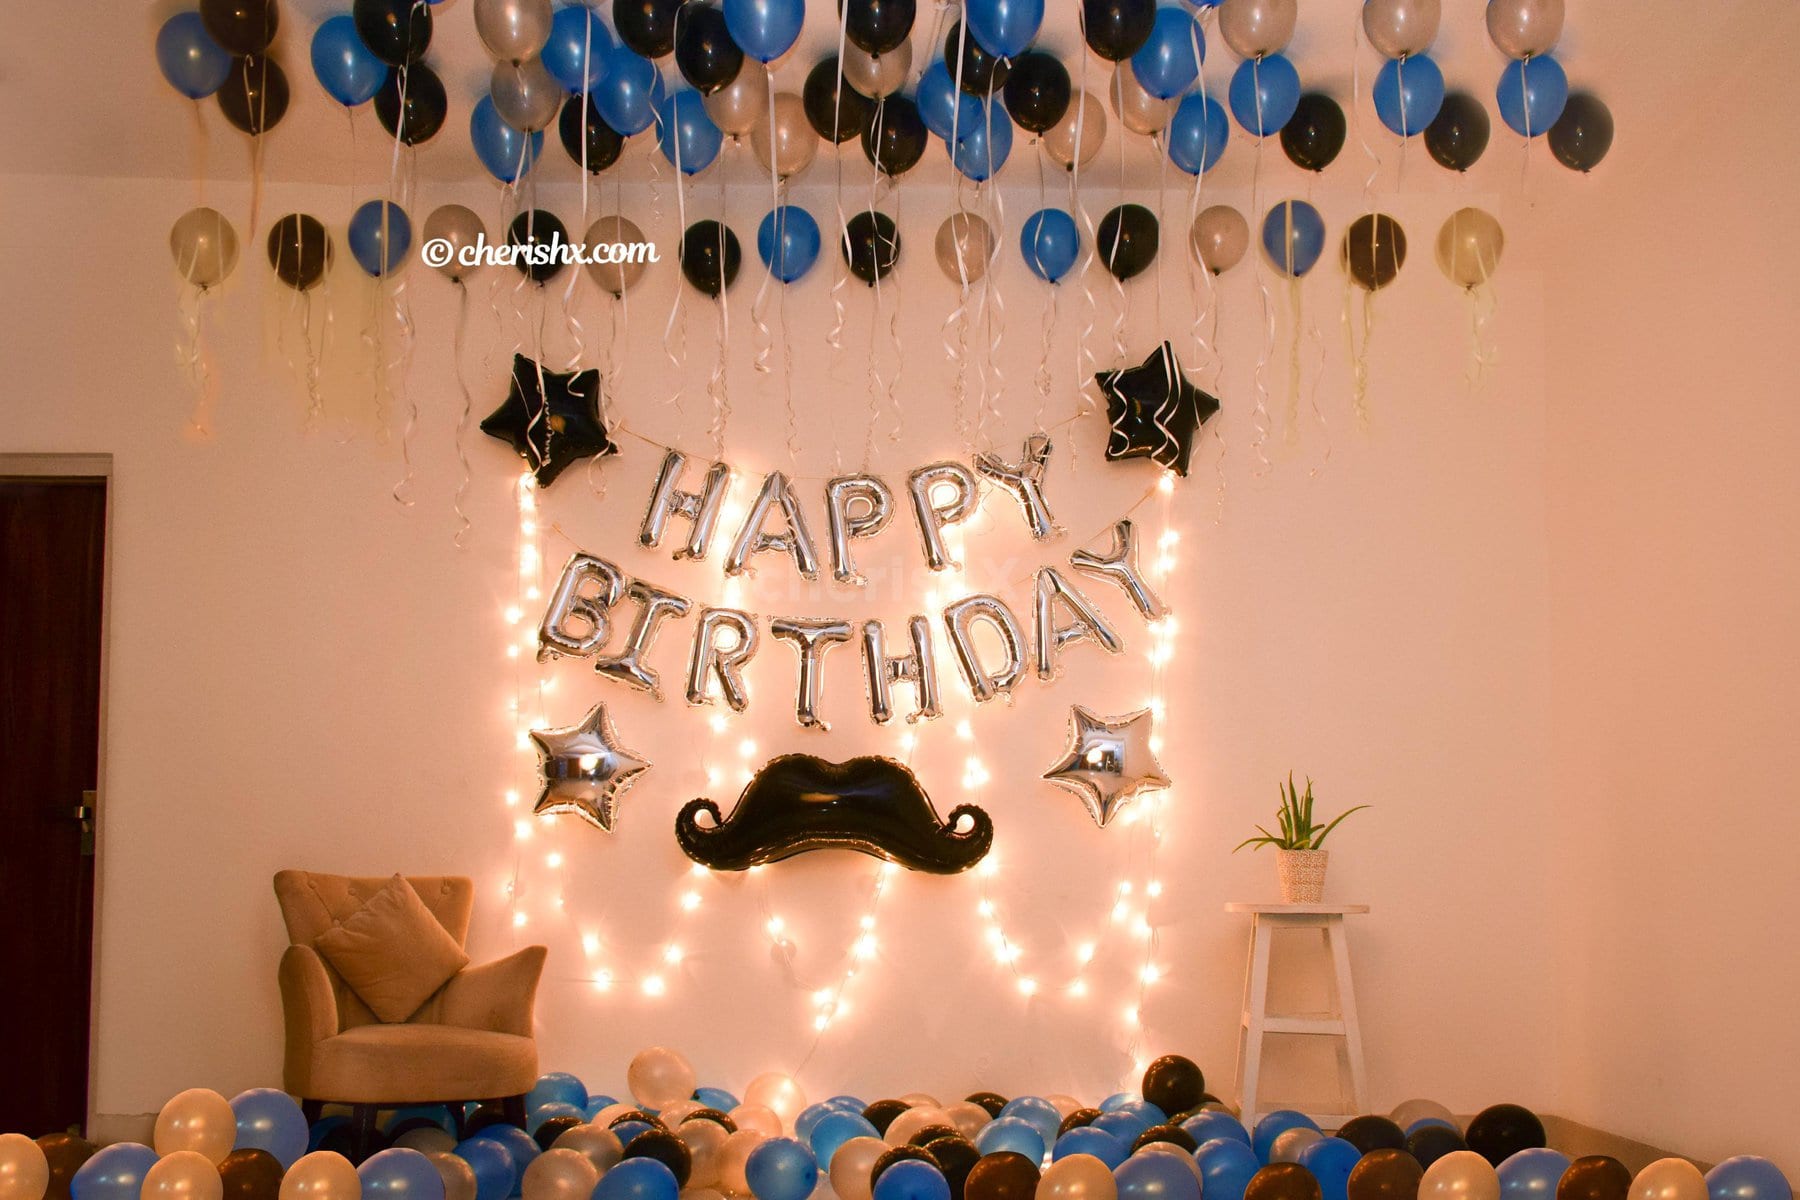 blue and black theme birthday decor